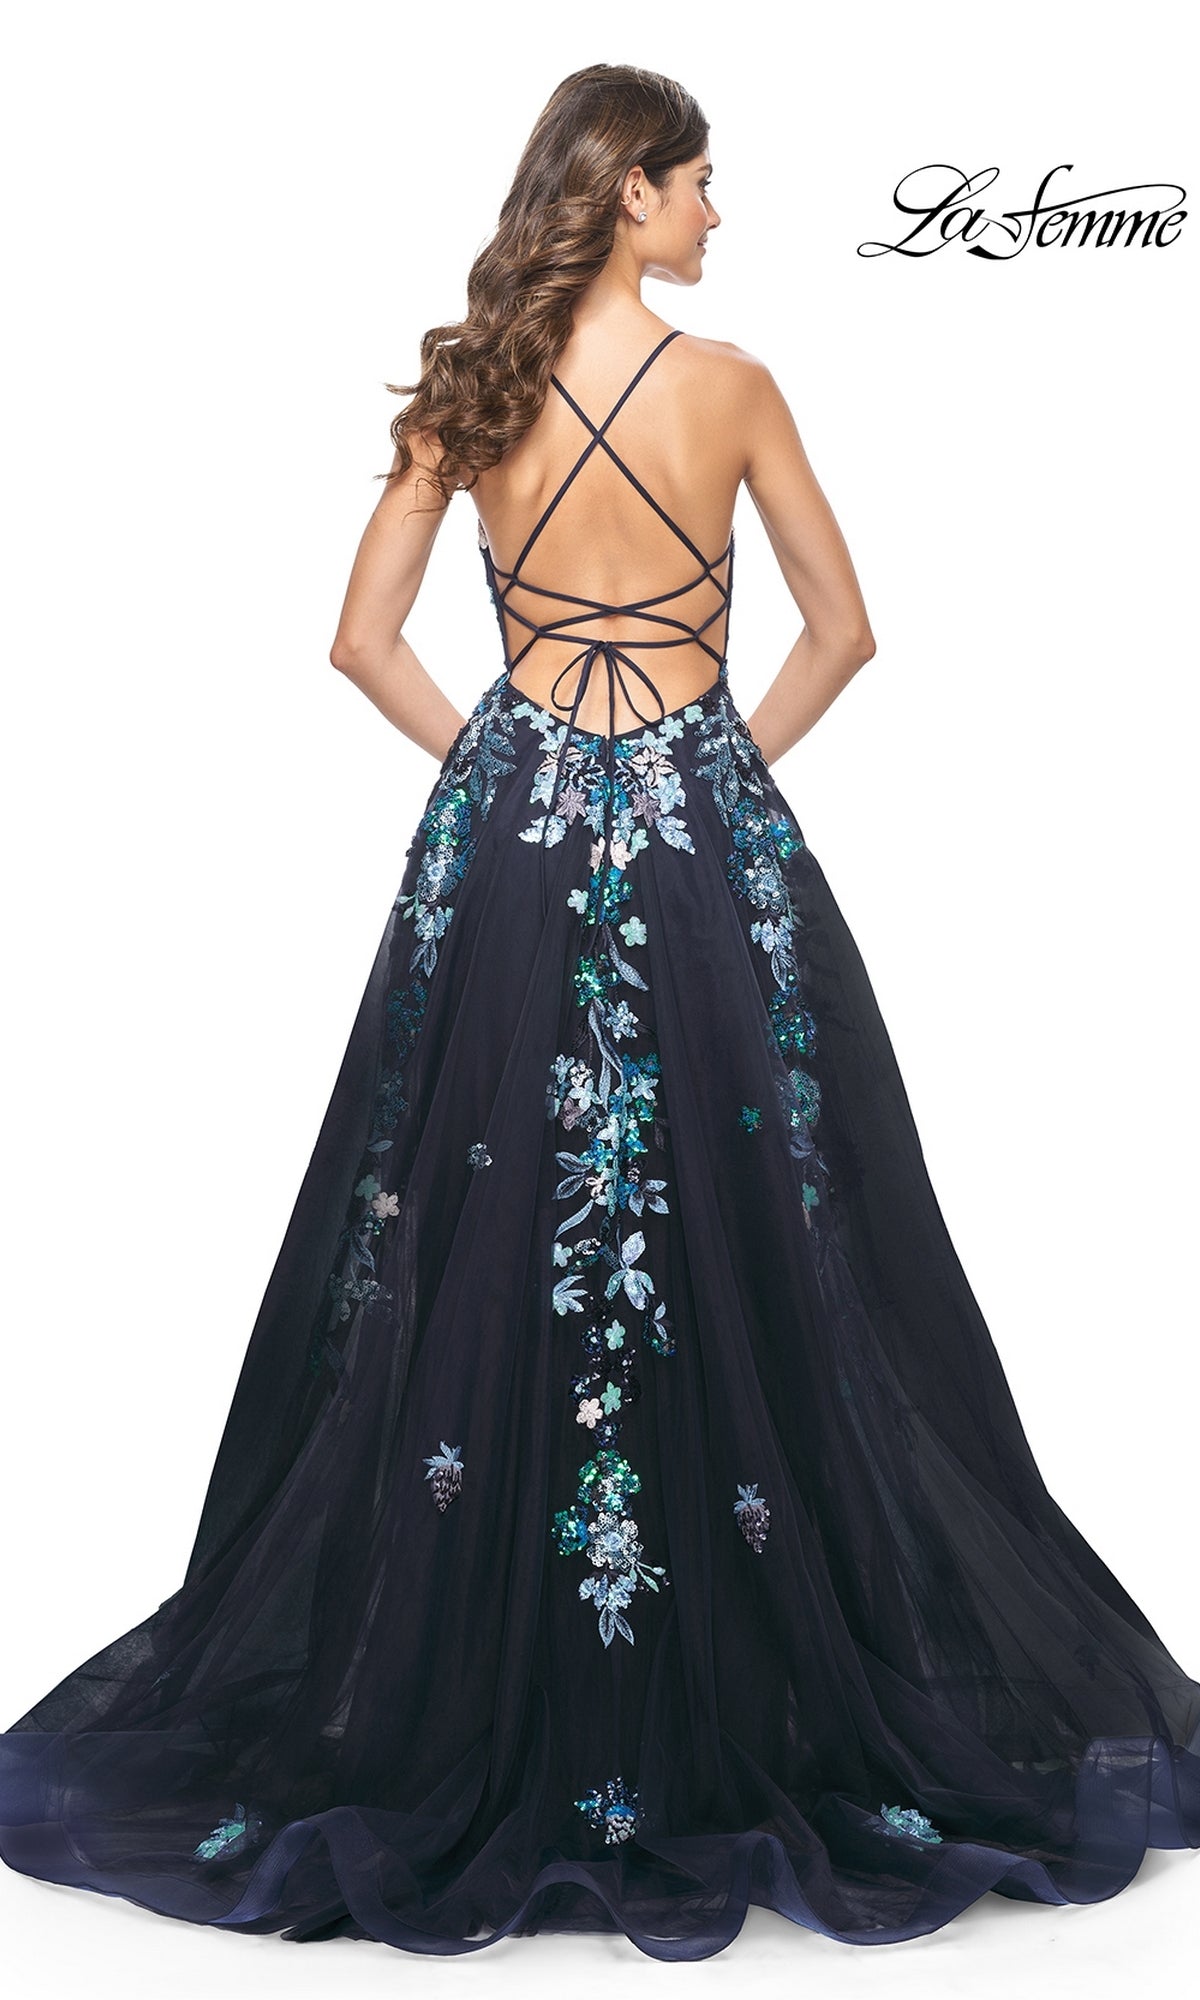  La Femme 32023 Formal Prom Dress